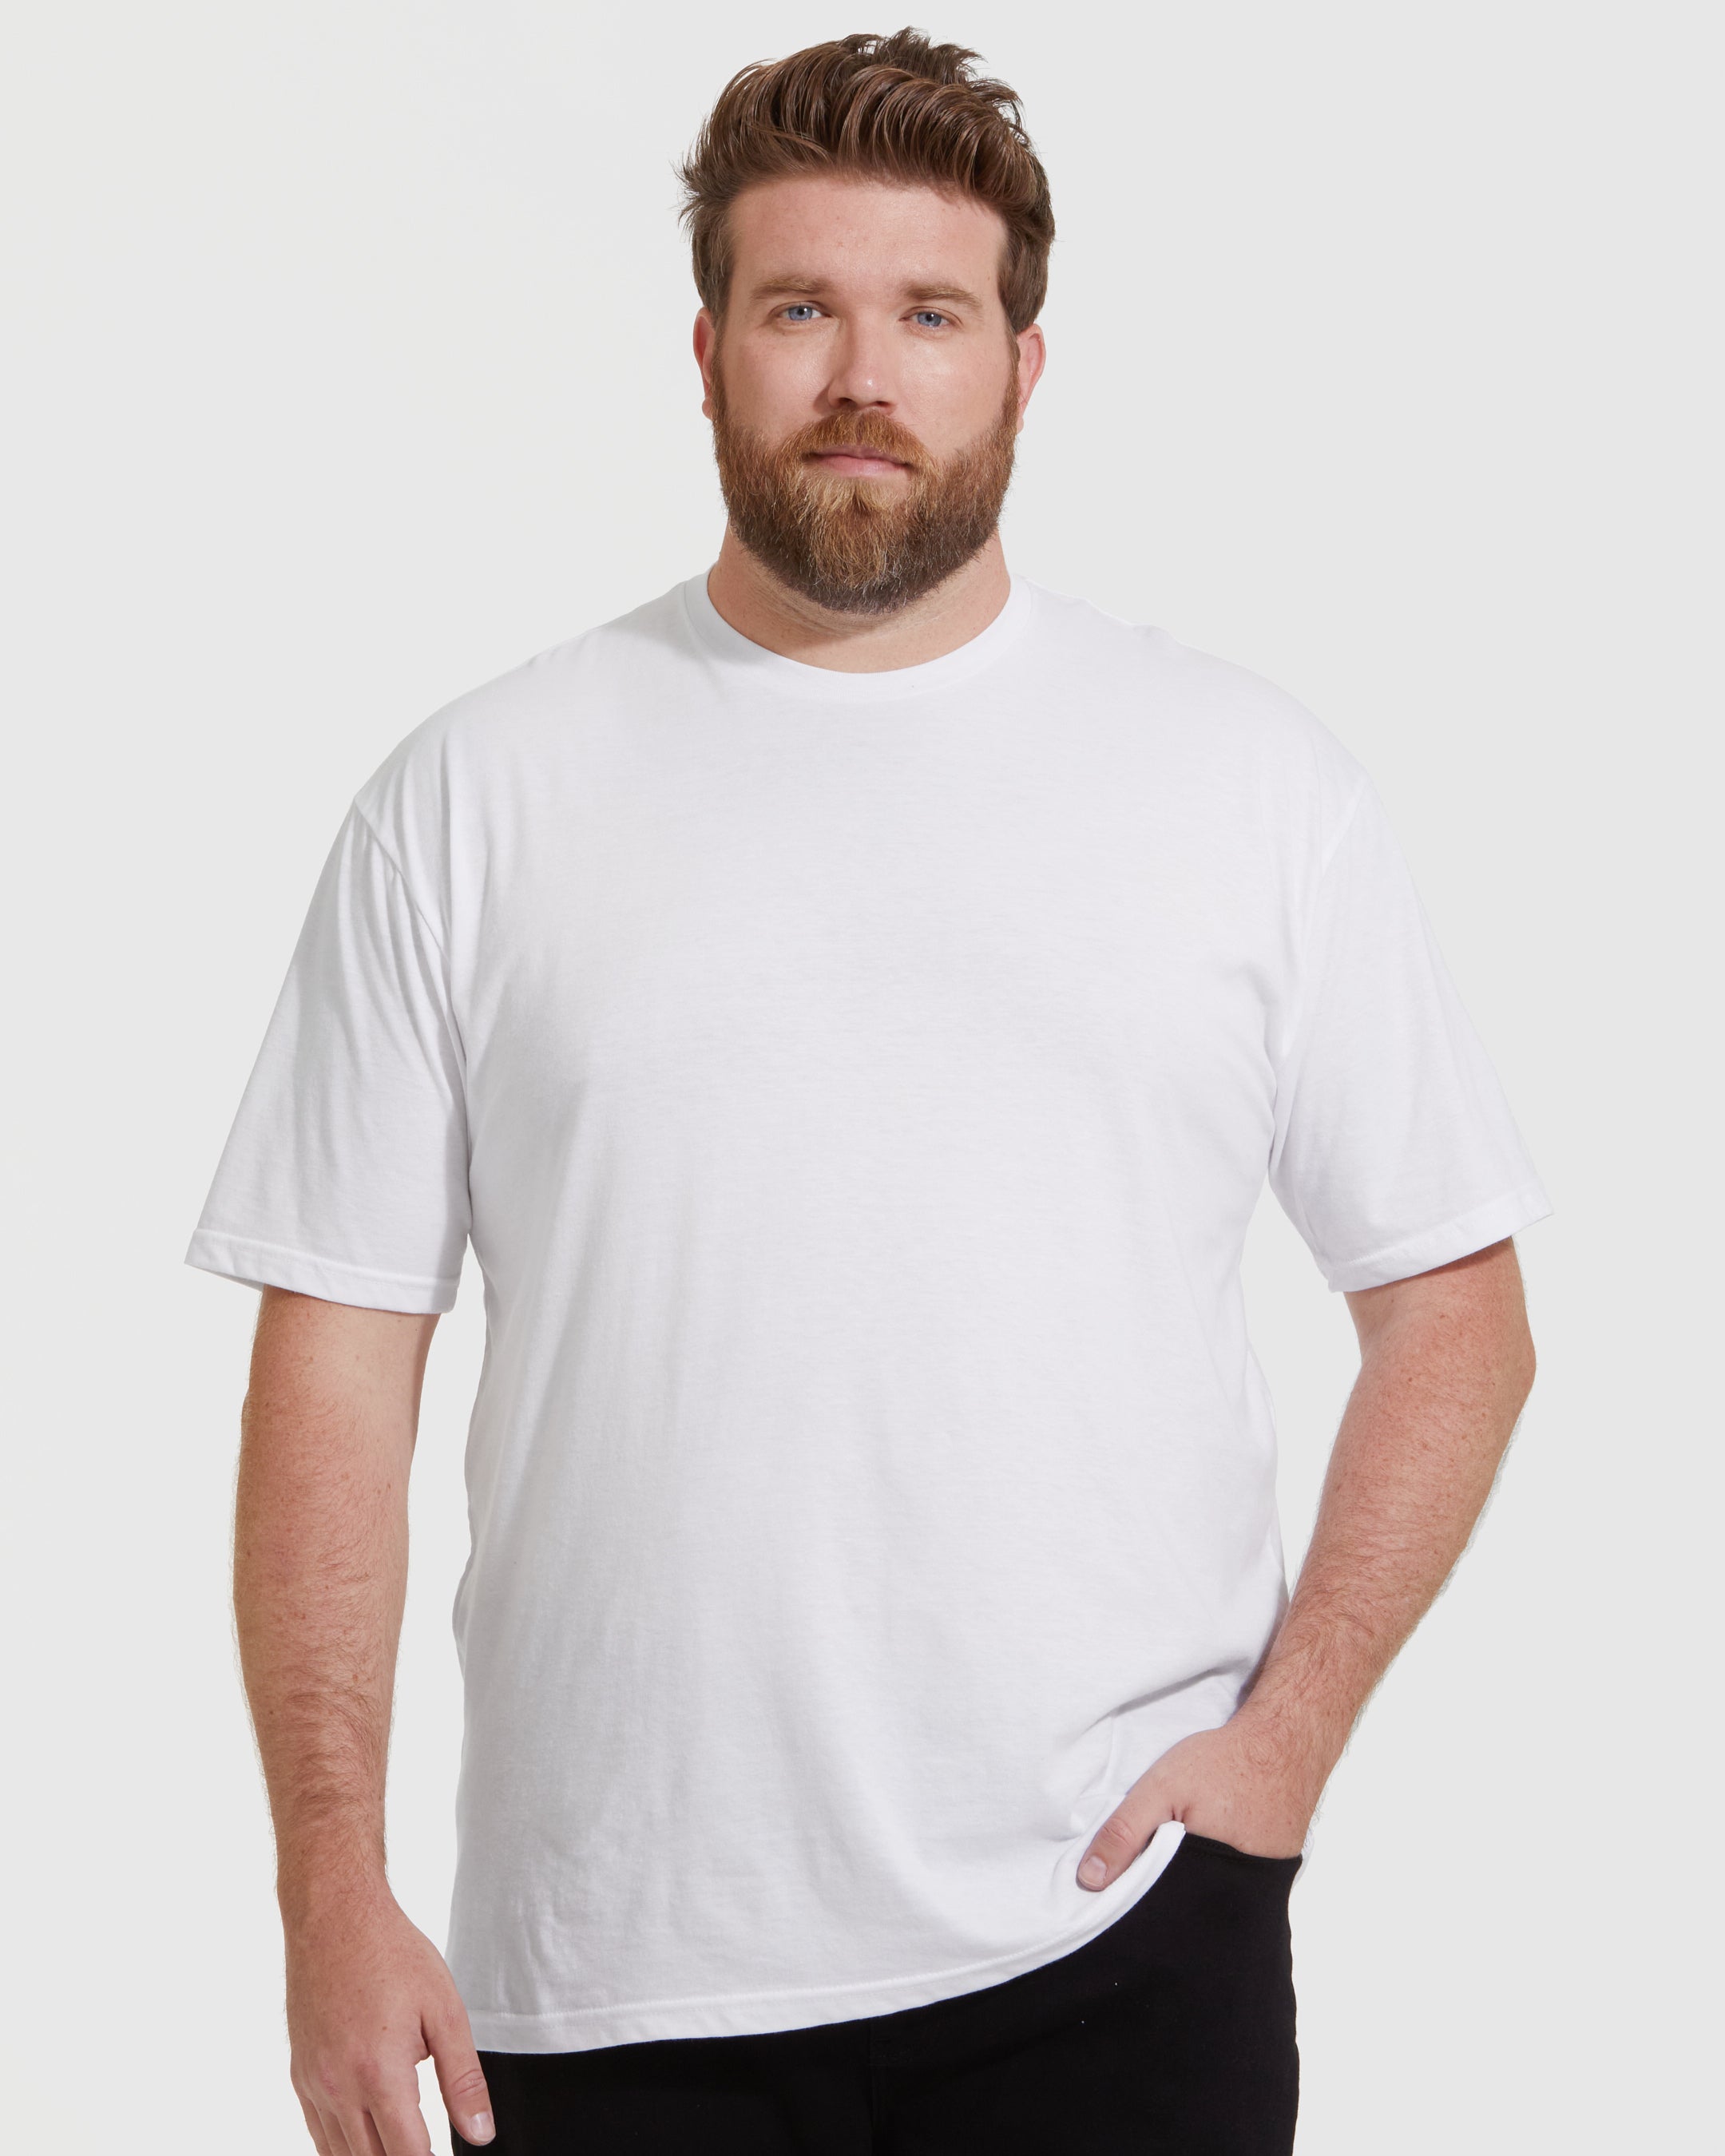 True Classic T-Shirt White Neck Men\'s - Crew